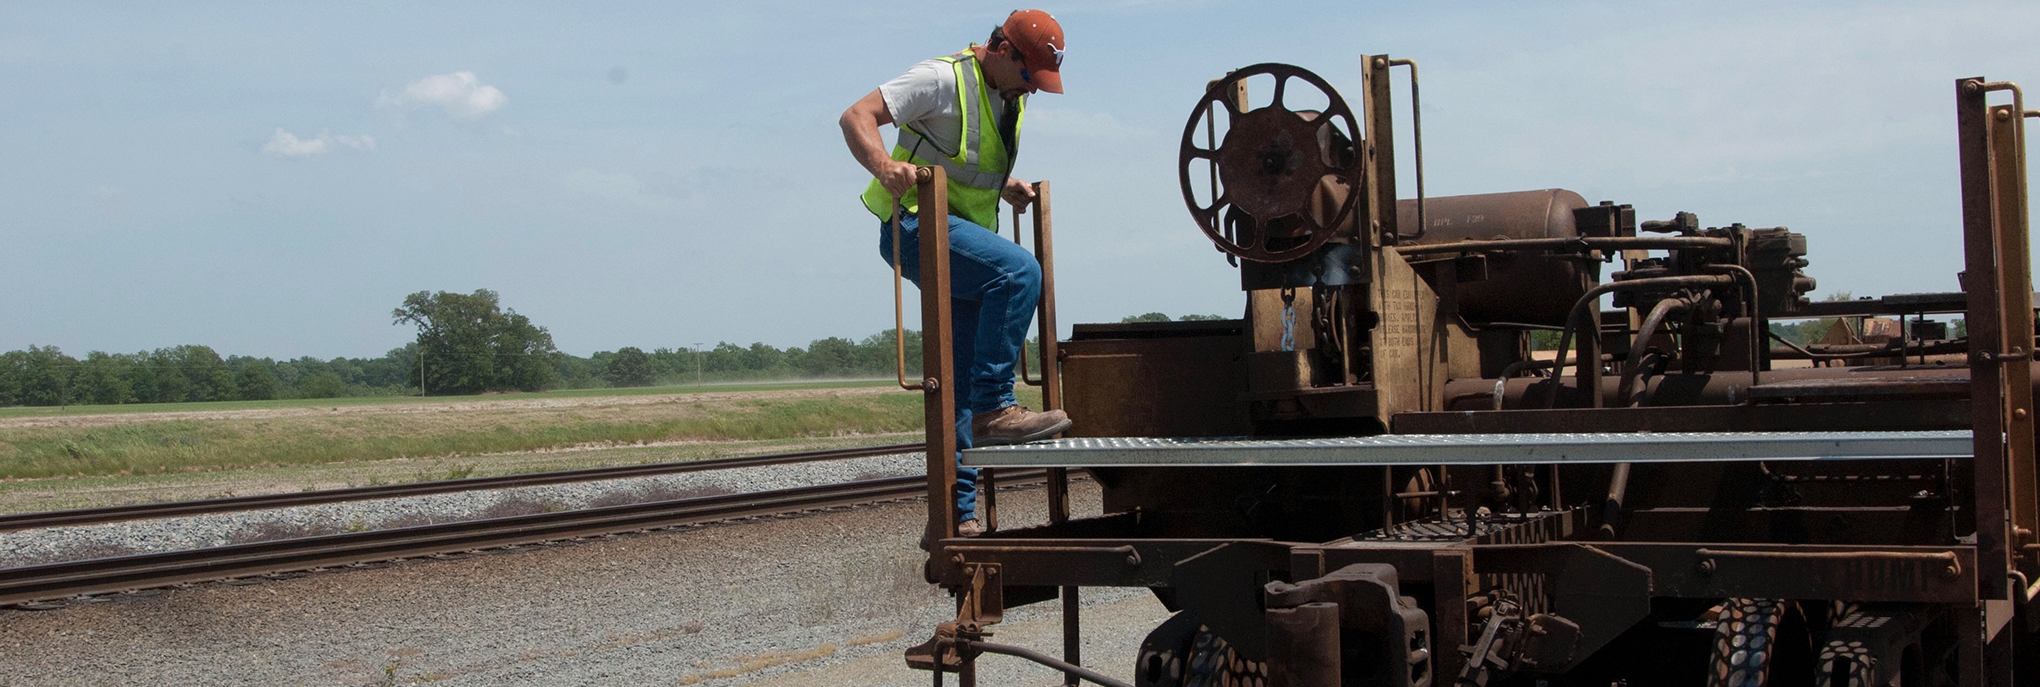 Railroad conductor staffed to examine rail equipment